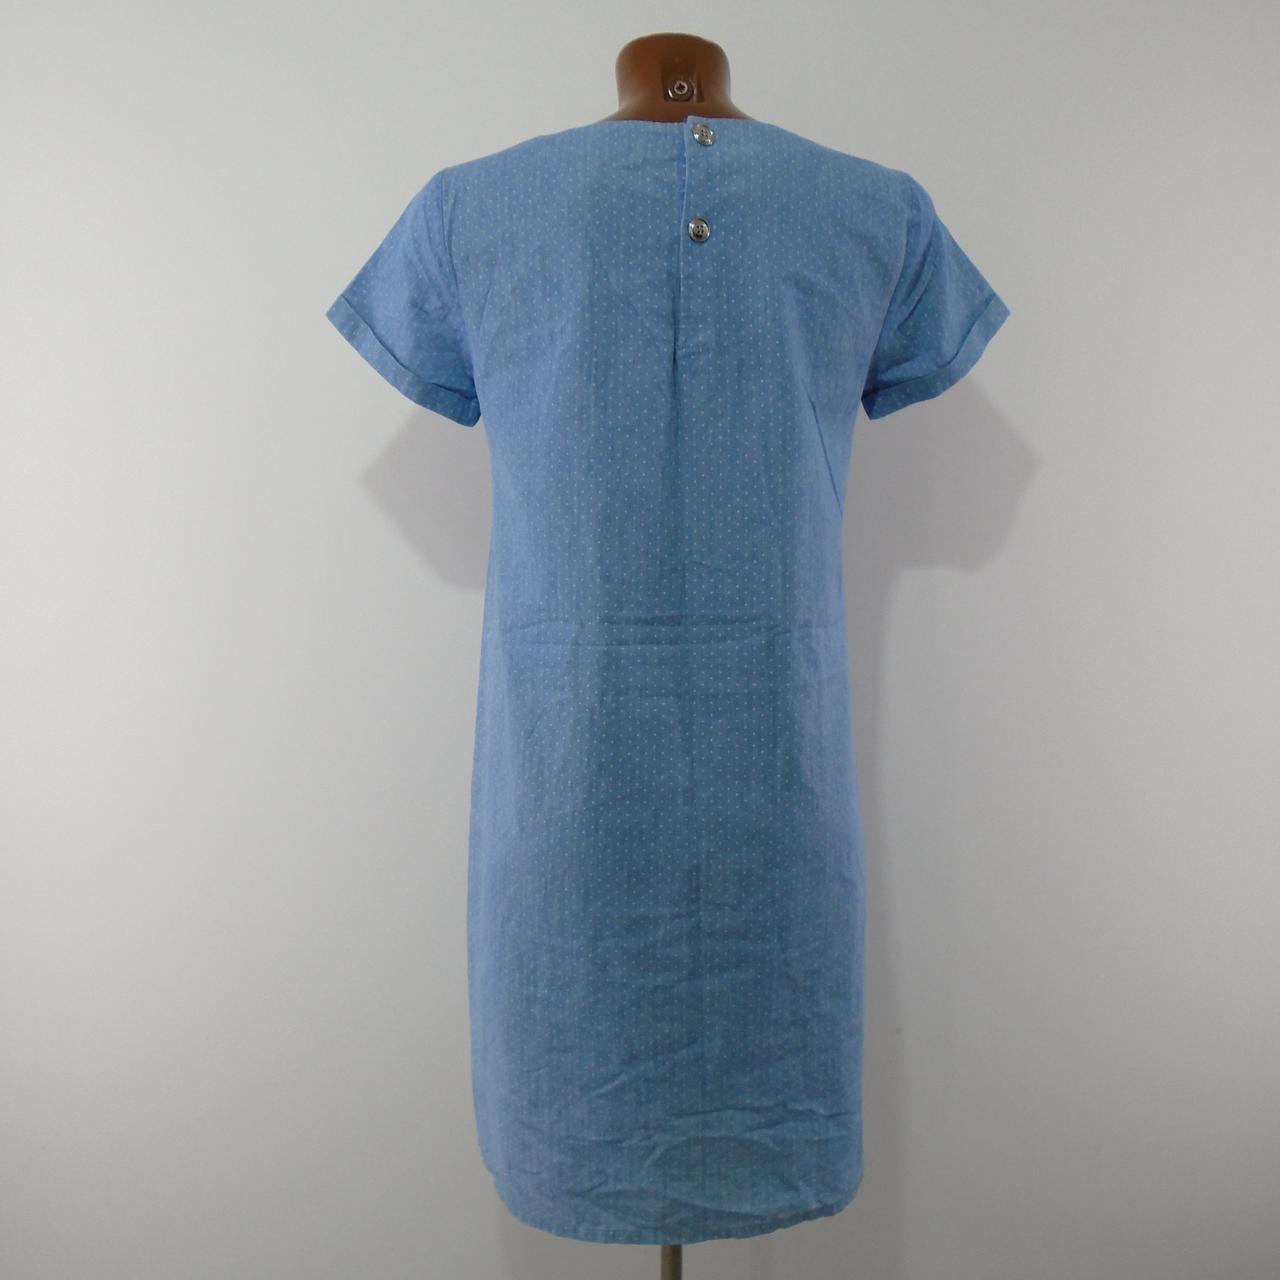 Women's Dress Tentazioni. Blue. M. Used. Very good